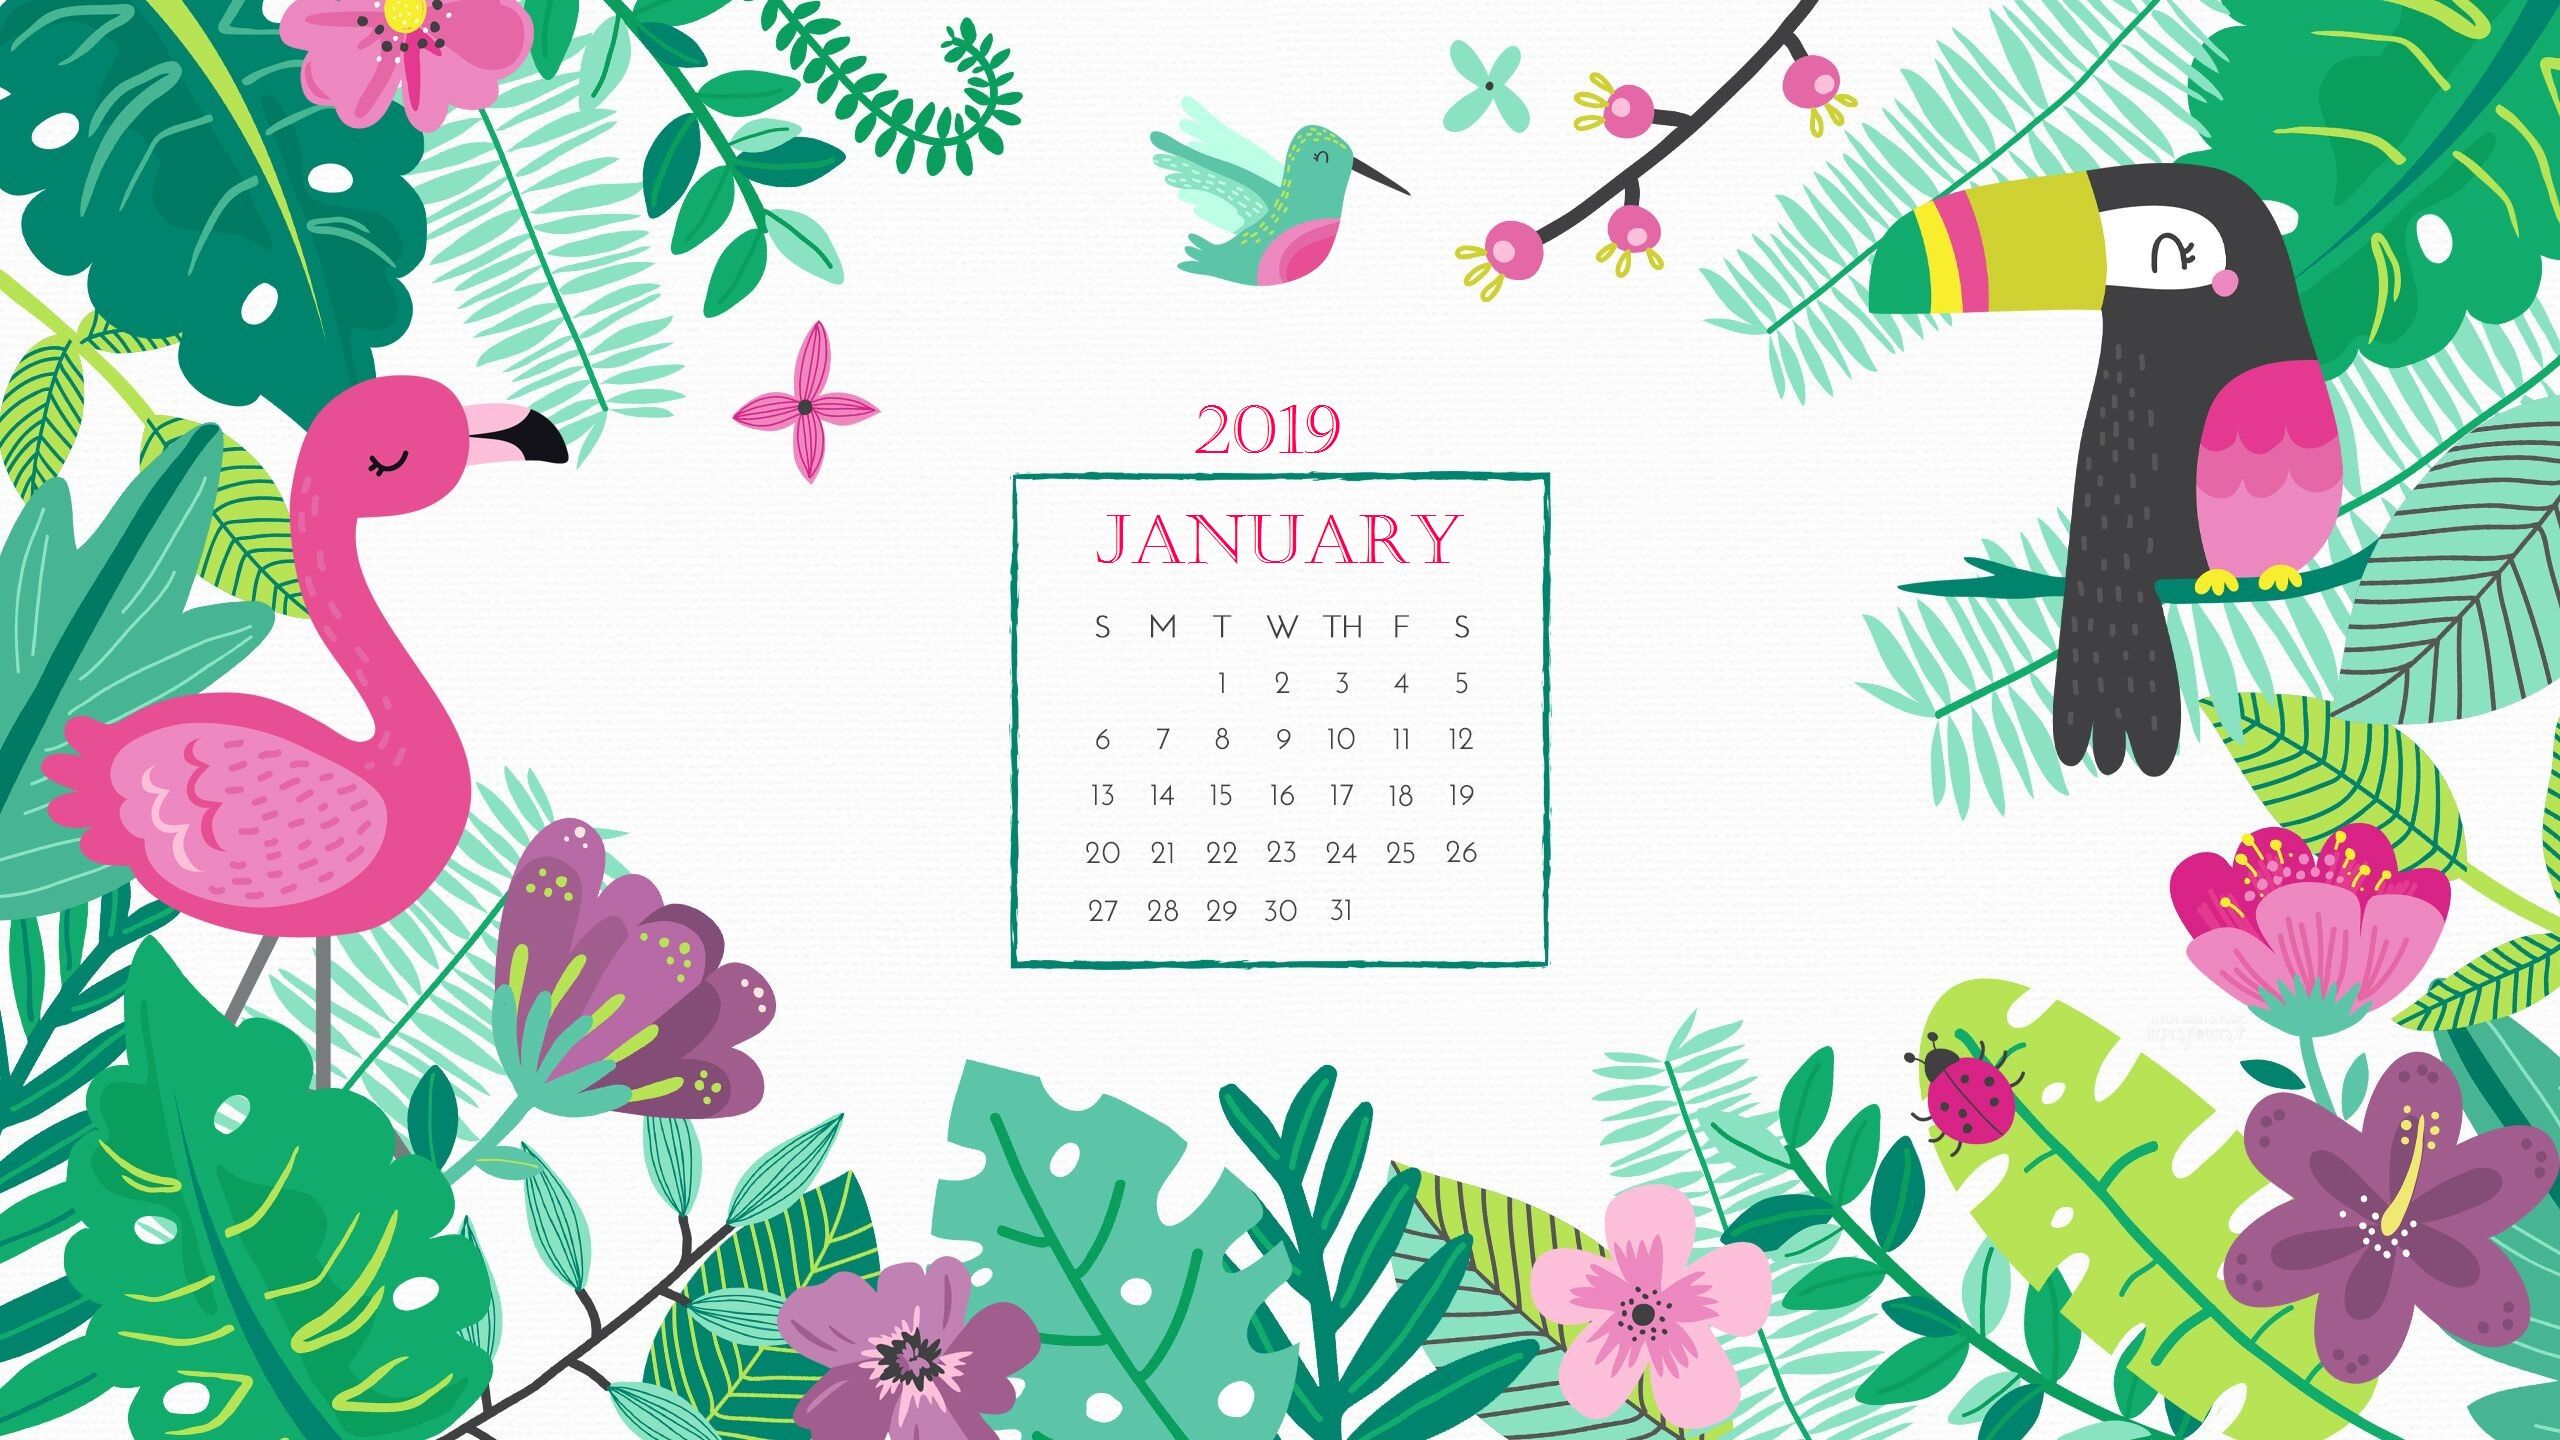 January Wallpaper With Calendar For Desktop Maxcalendars In